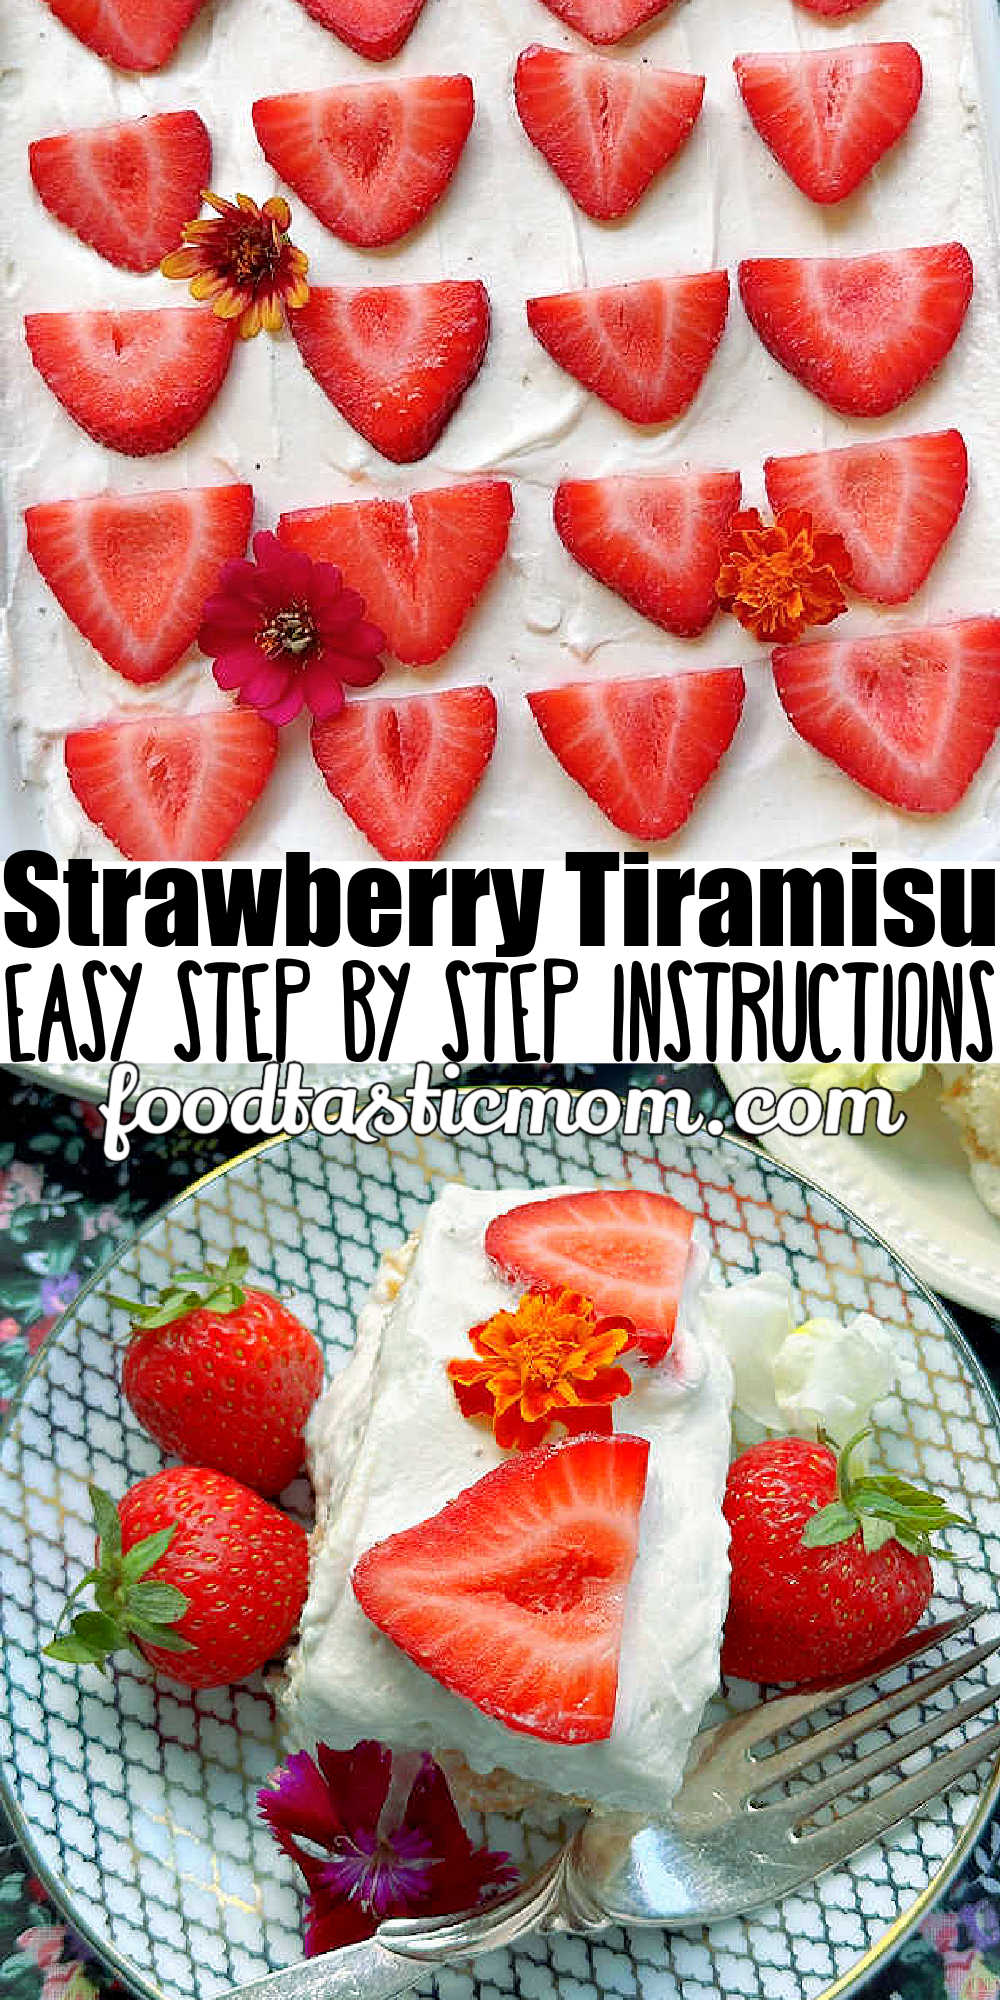 This easy Strawberry Tiramisu is a classic Italian dessert remade with fresh strawberries, mascarpone whipped cream, herbal tea and orange liqueur.  via @foodtasticmom